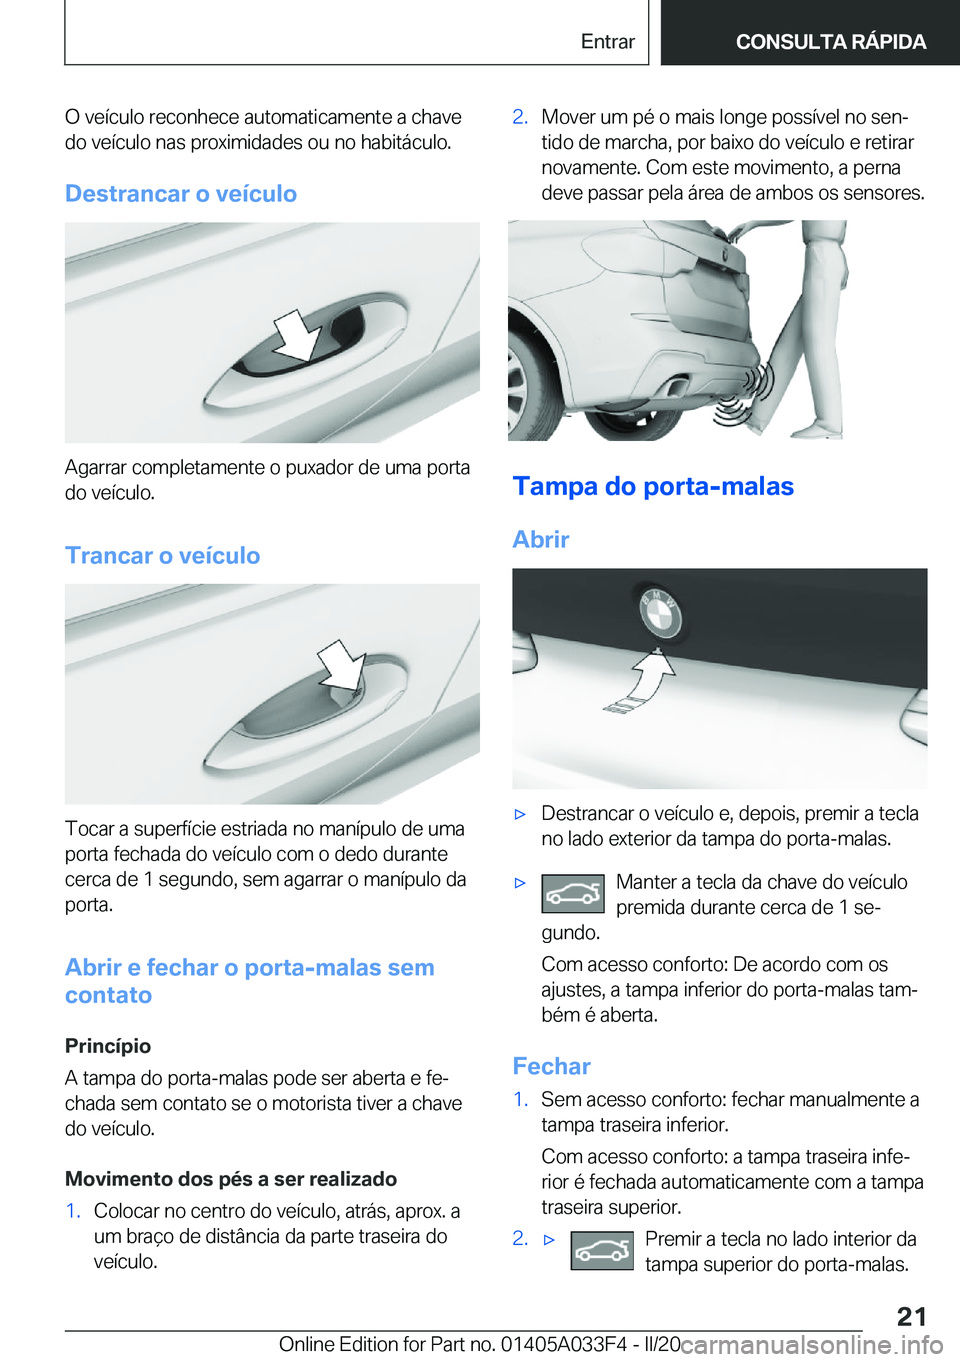 BMW X5 M 2020  Manual do condutor (in Portuguese) �O��v�e�